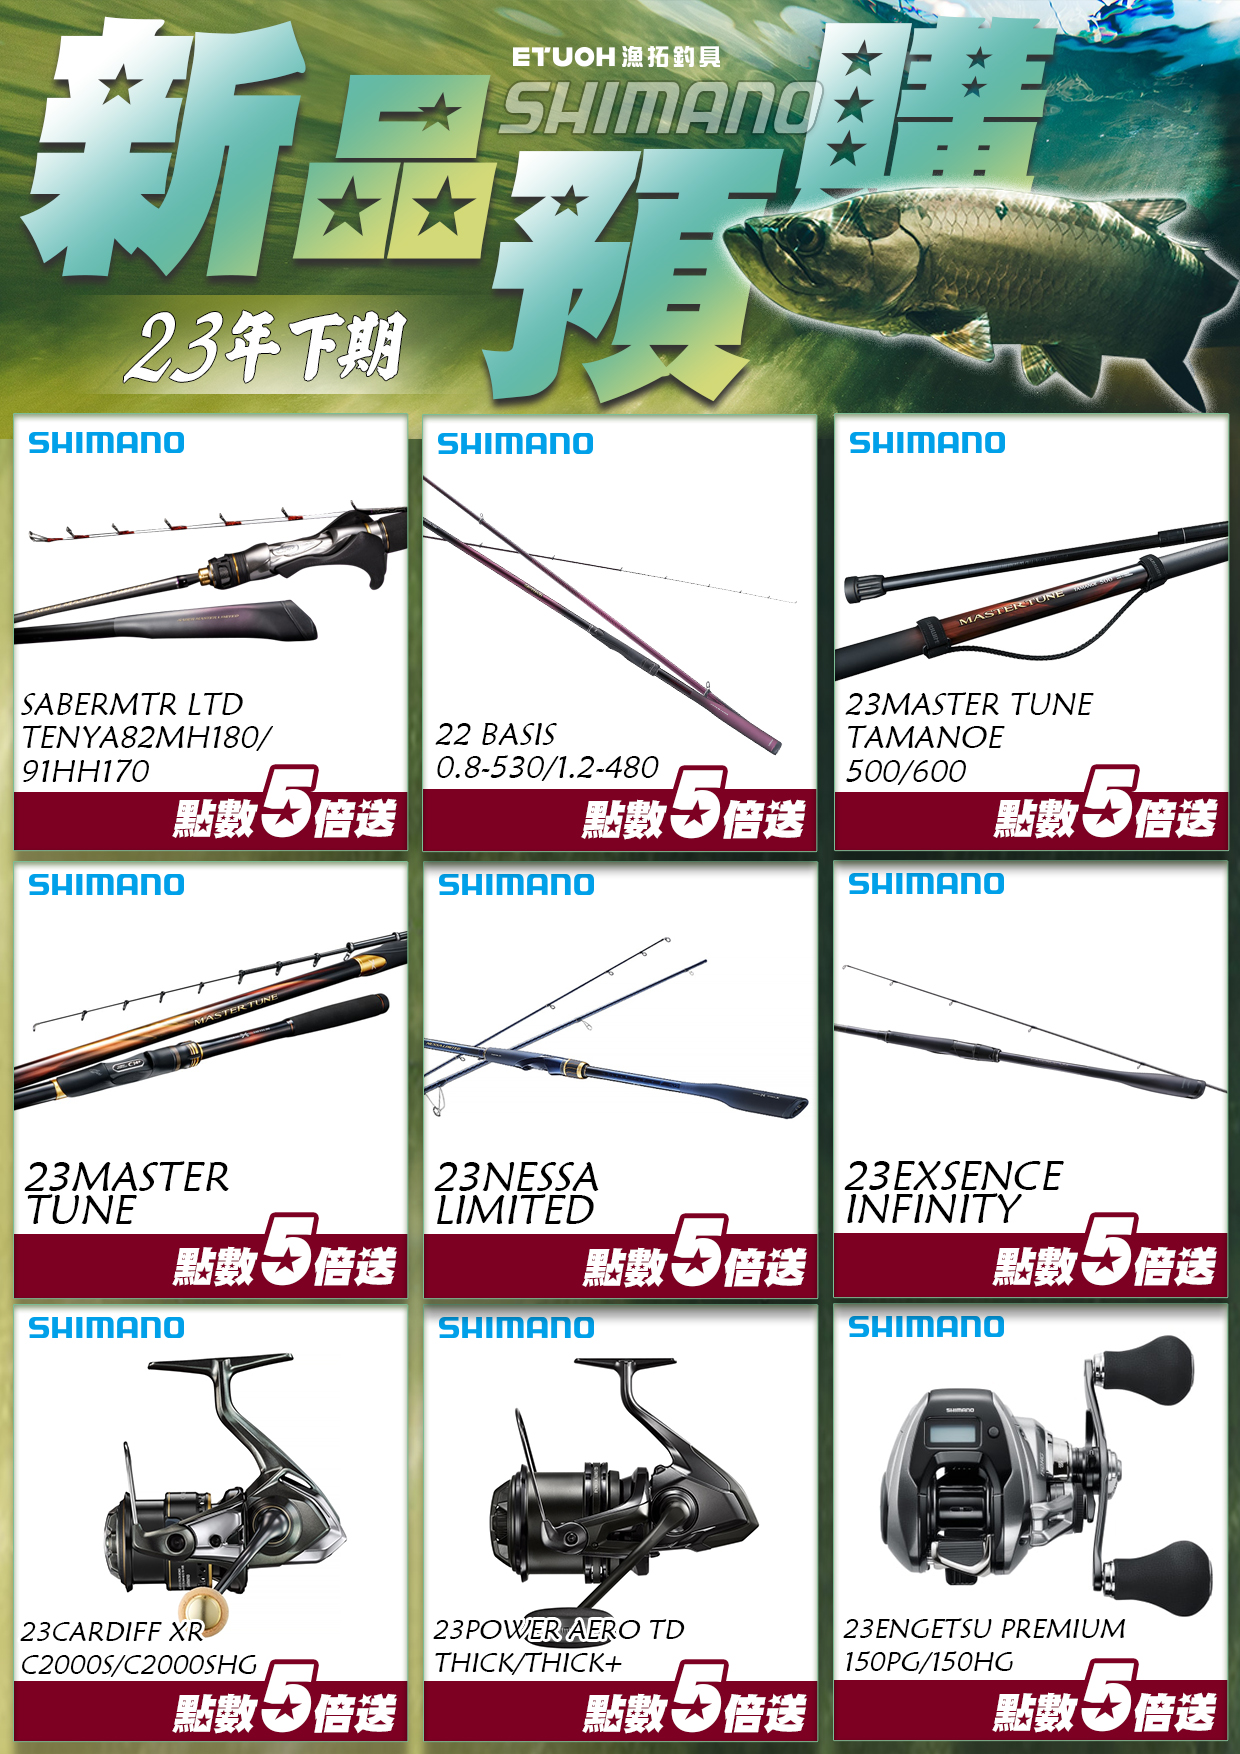 SHIMANO新品預購優惠給您👏👏👏 - ETUOH 漁拓企業股份有限公司